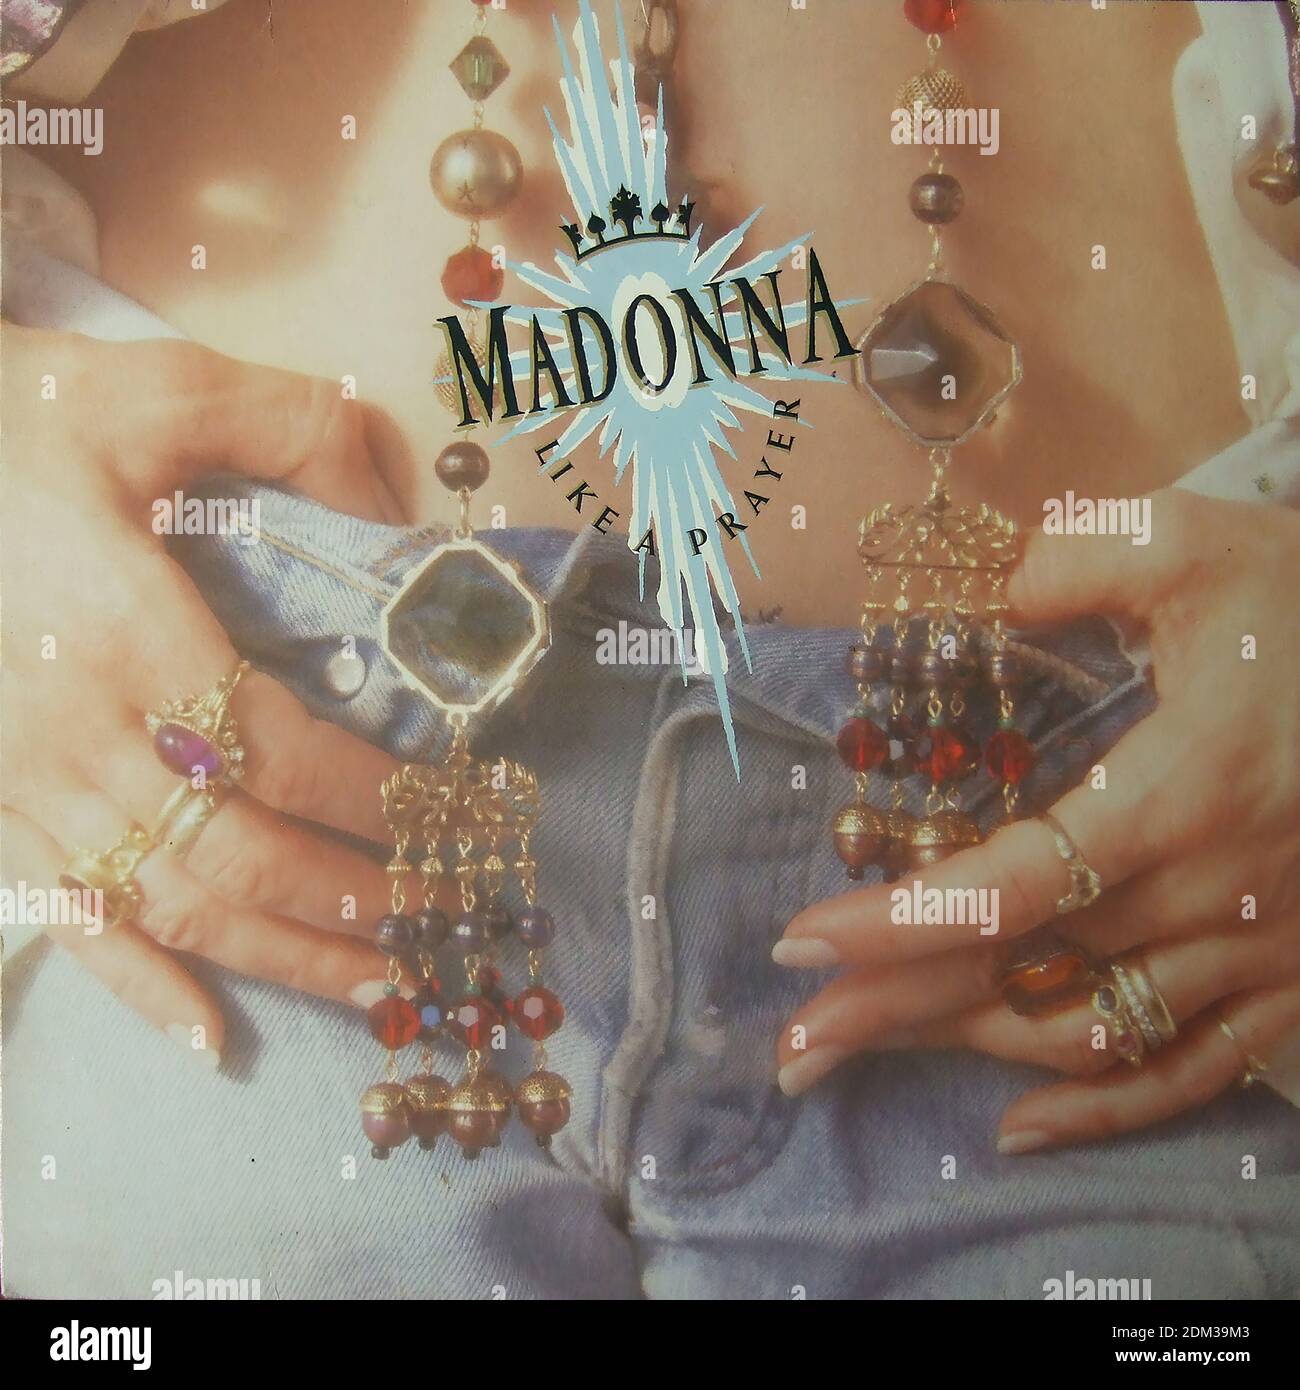 Madonna - Like A Prayer - Vintage vinyl album cover Stock Photo - Alamy